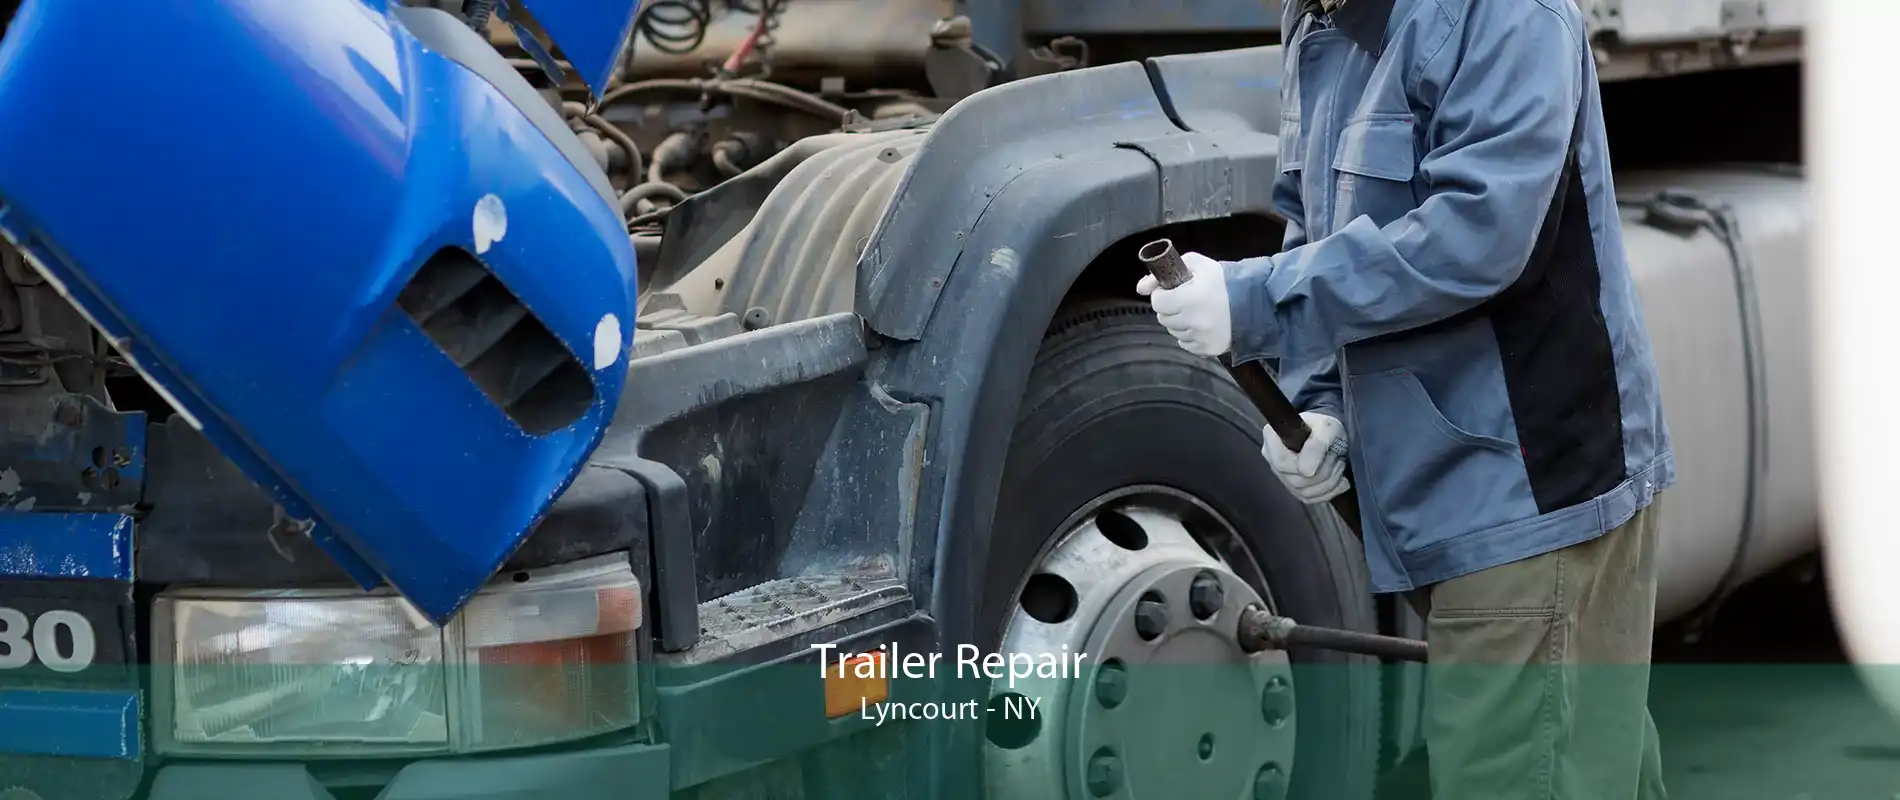 Trailer Repair Lyncourt - NY